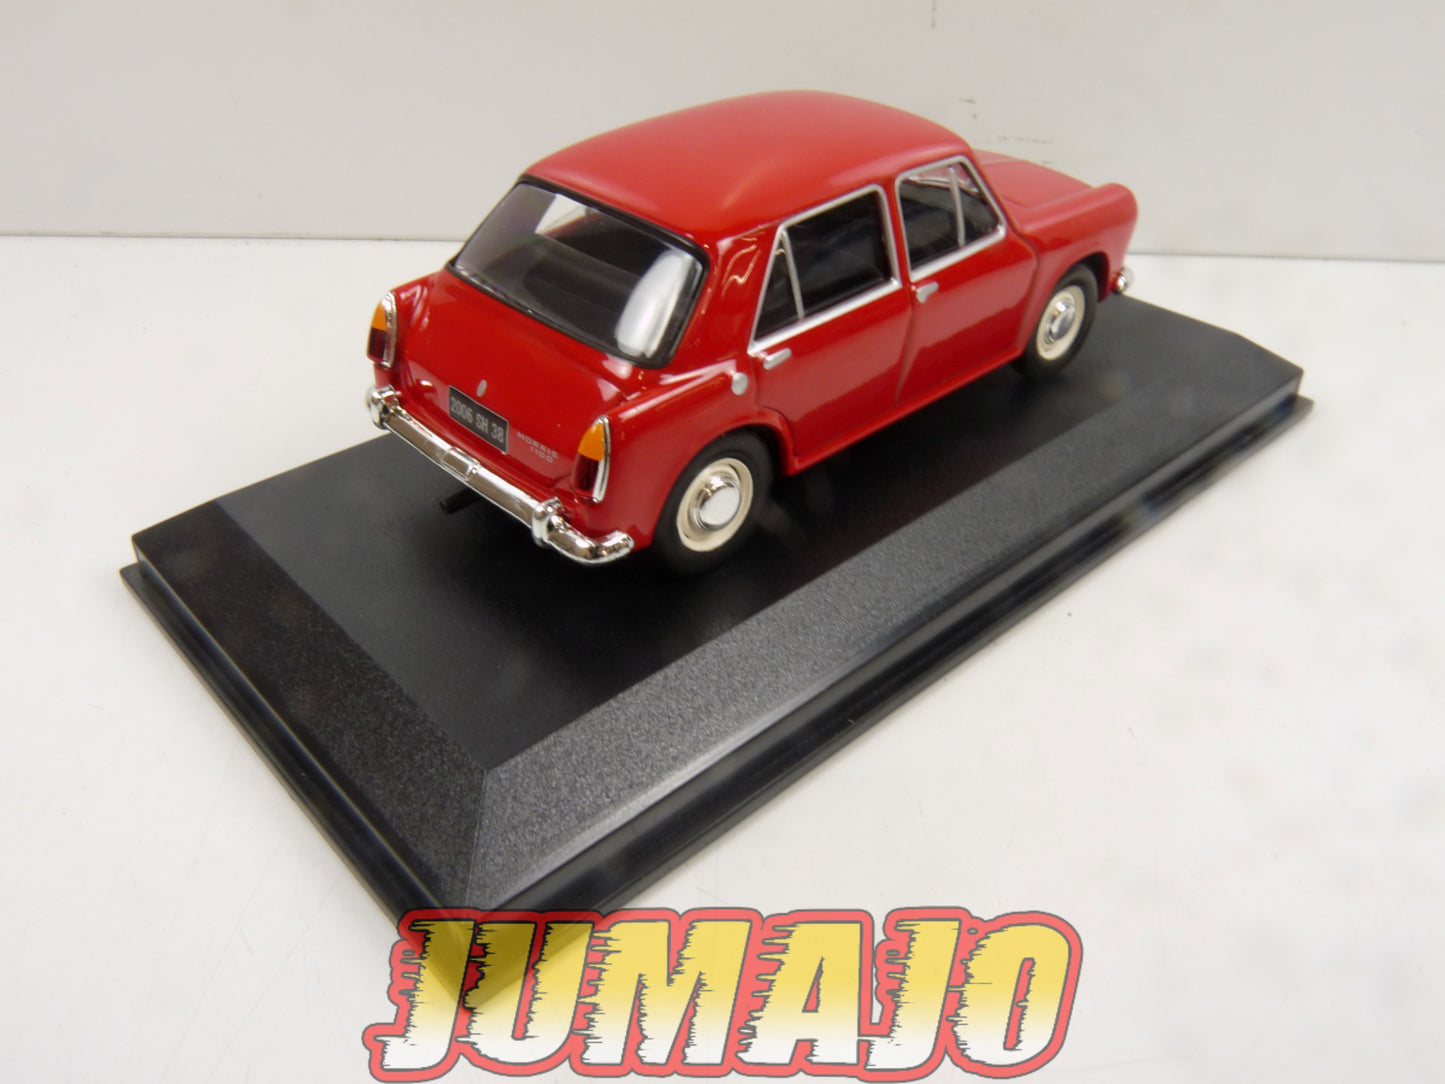 VA19 voiture 1/43 IXO altaya : MORRIS 1100 1967 rouge